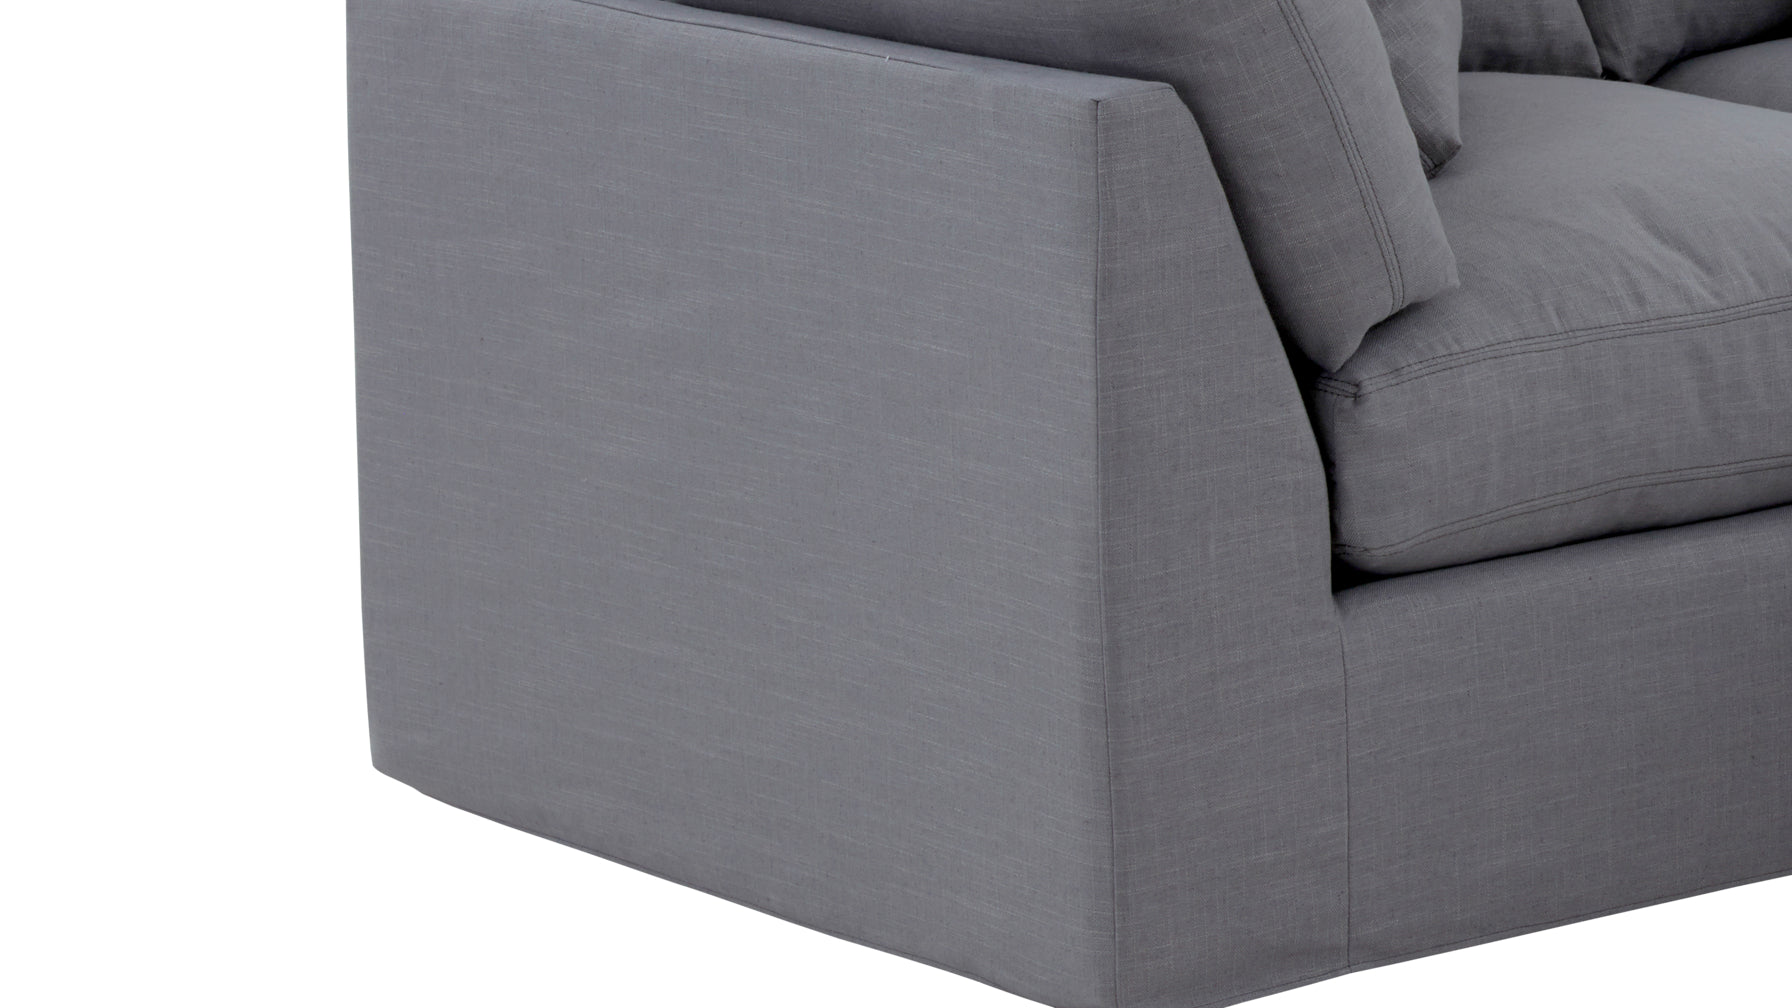 Get Together™ 2-Piece Modular Sofa, Standard, Moonlight - Image 8